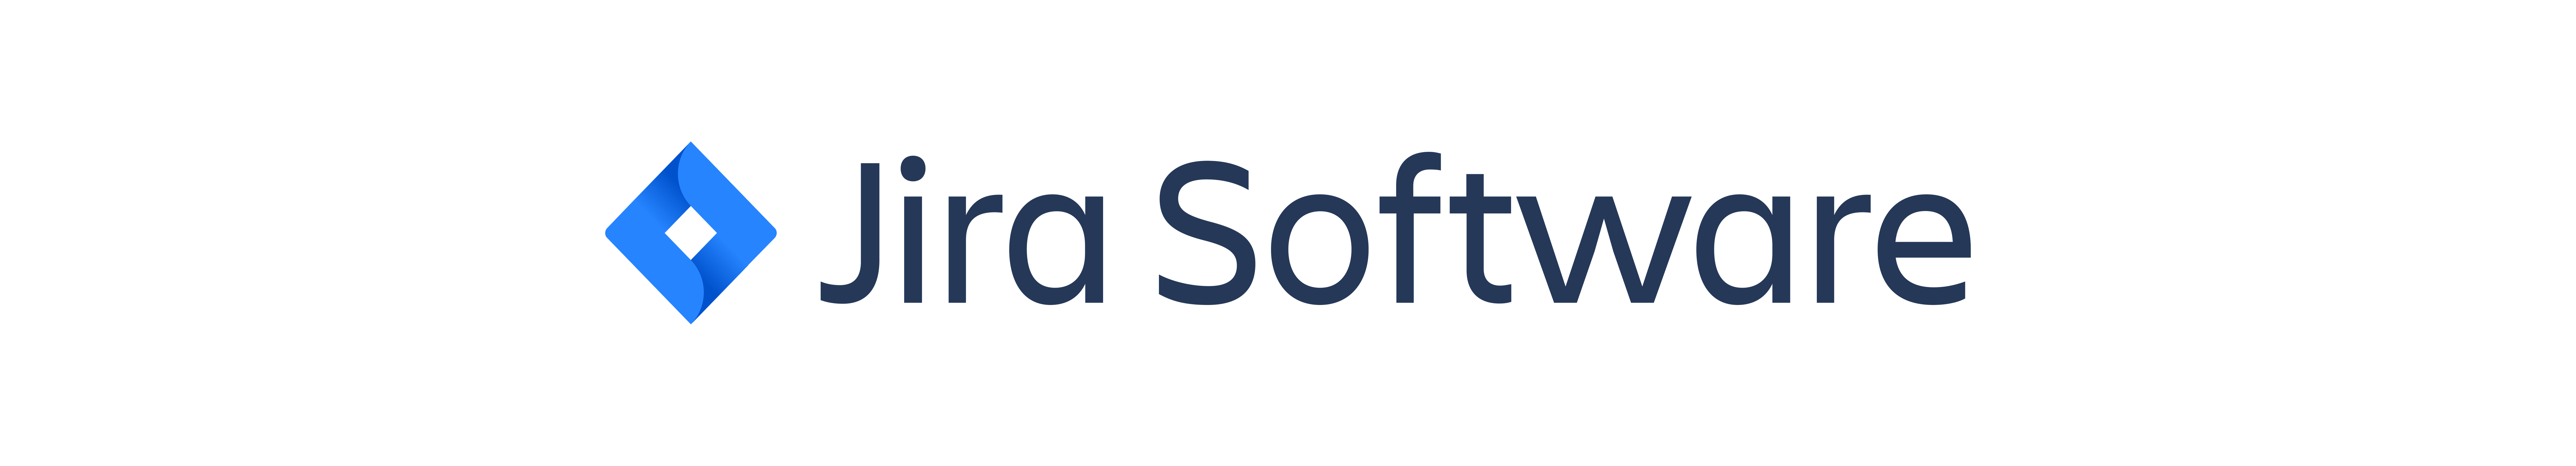 JiraSoftware-standard_logo-1